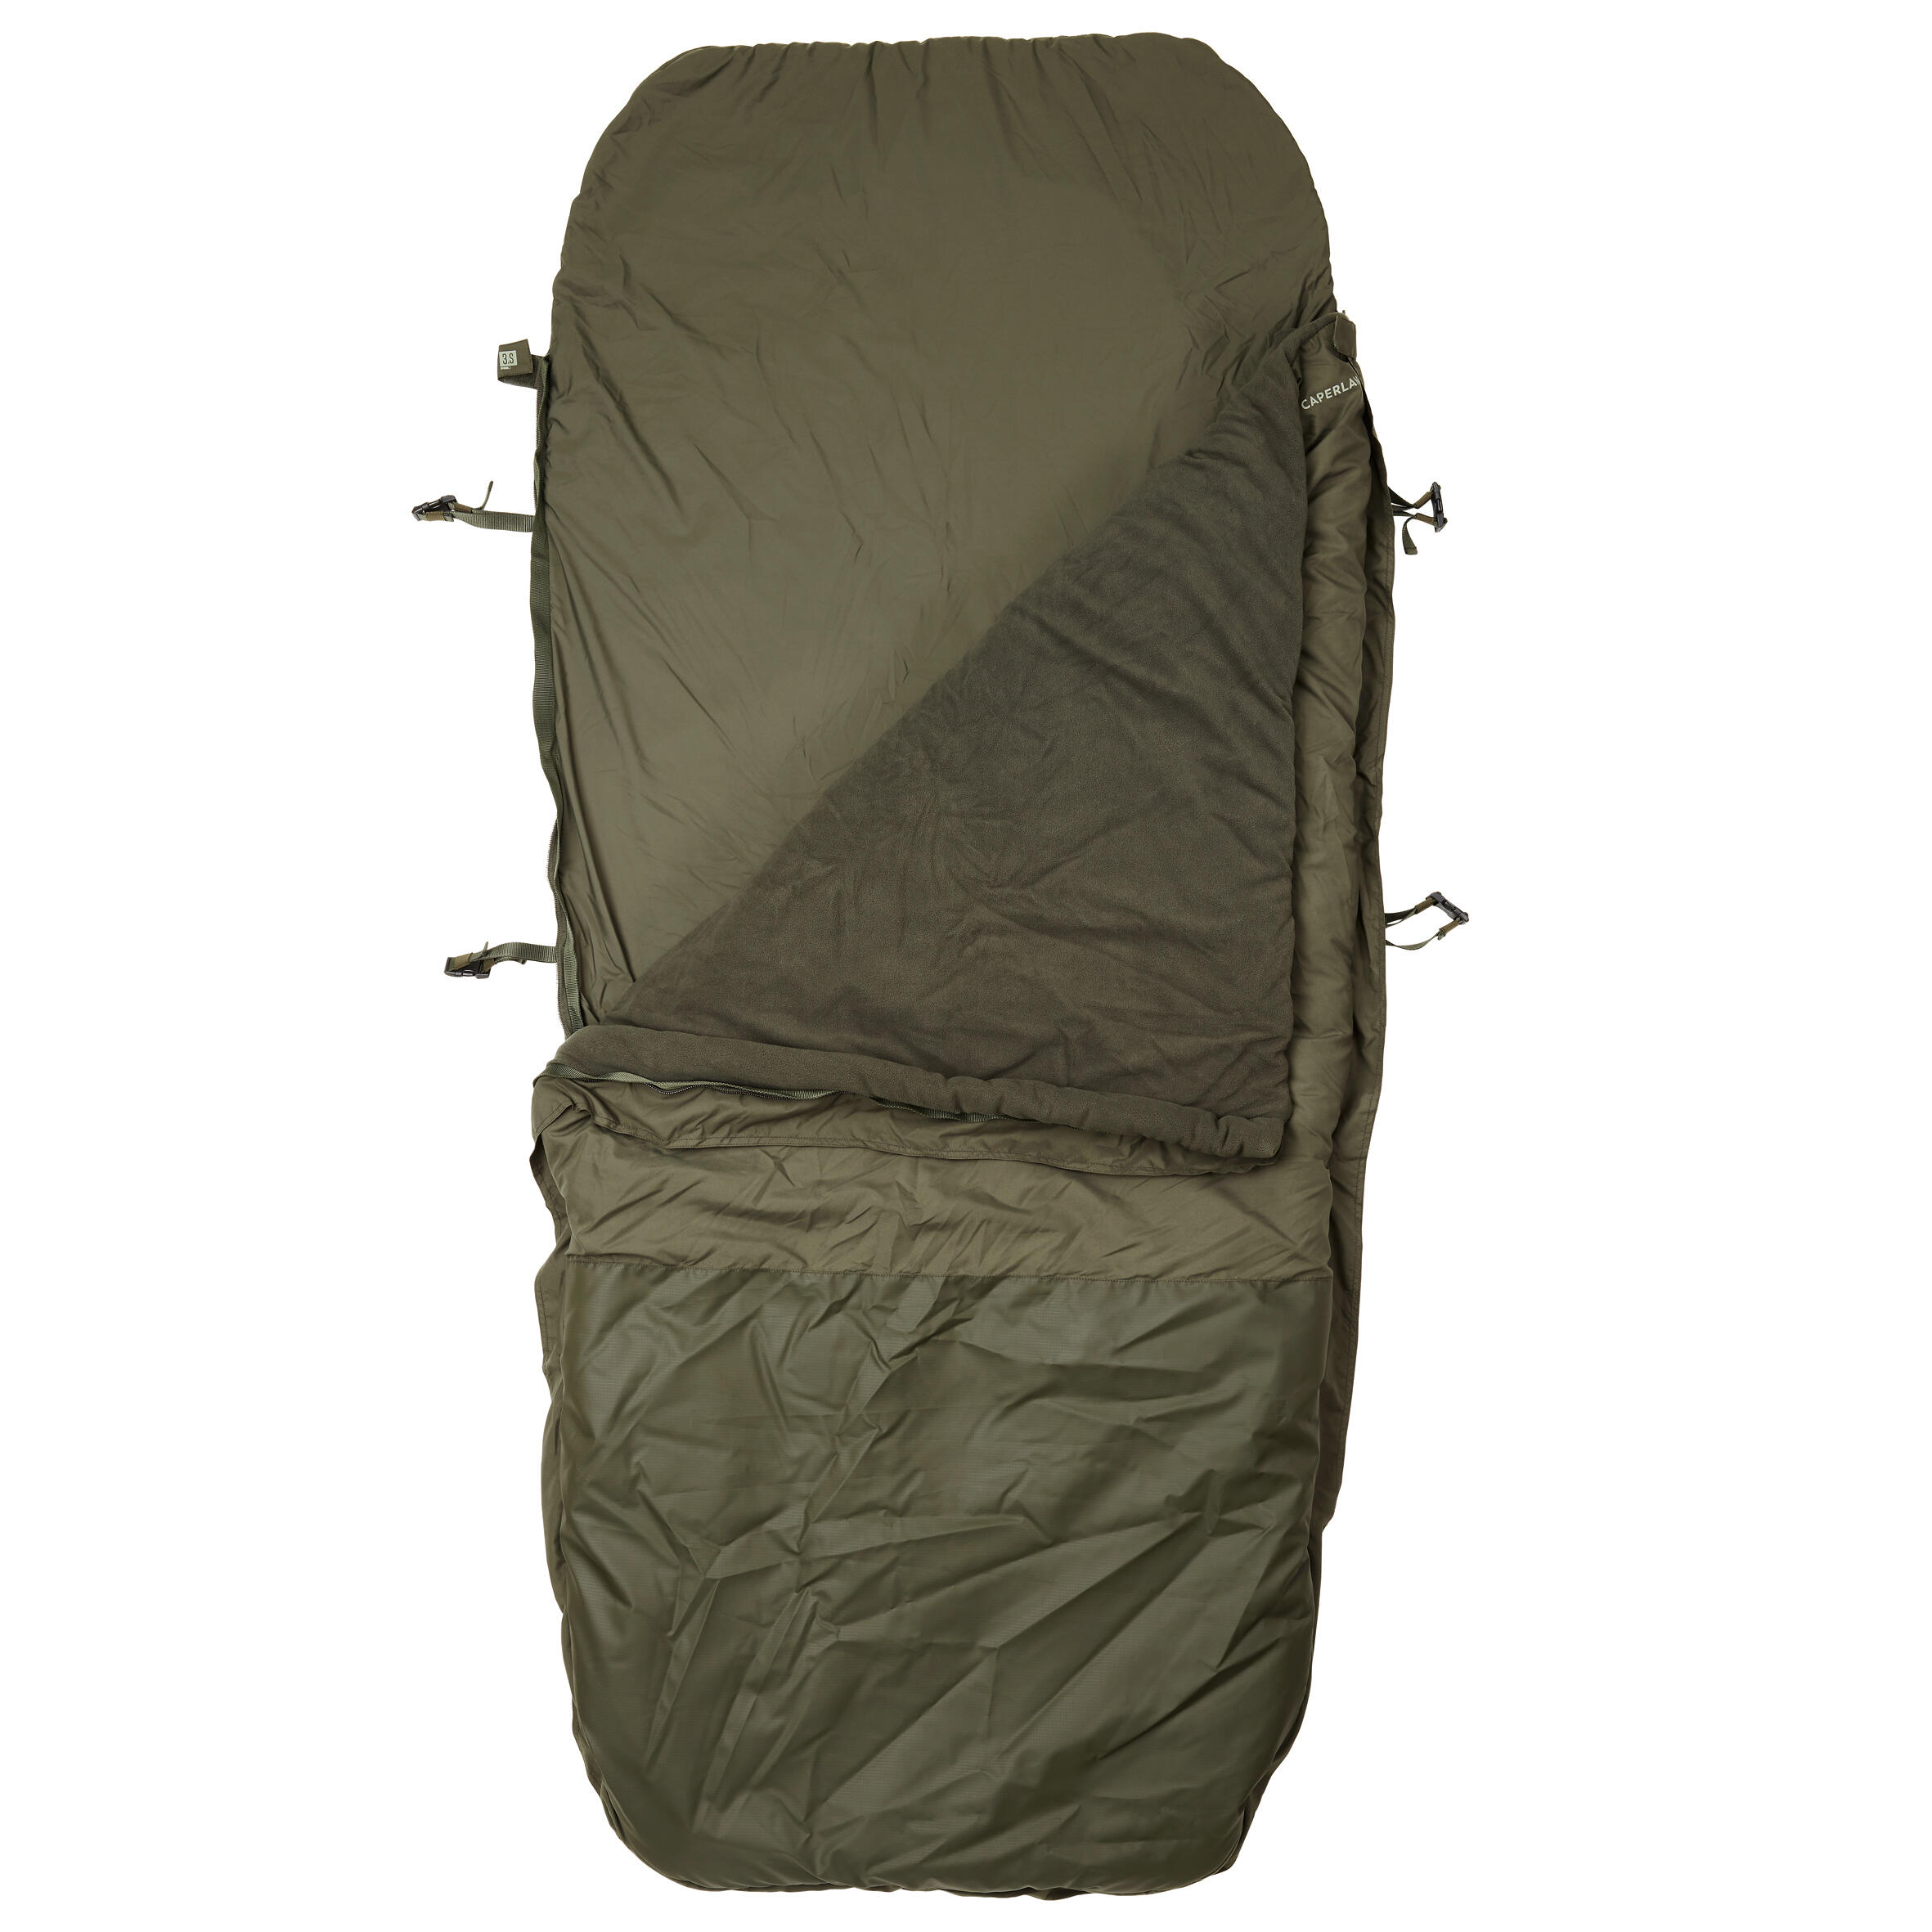 CAPERLAN 3-season sleeping bag for carp fishing